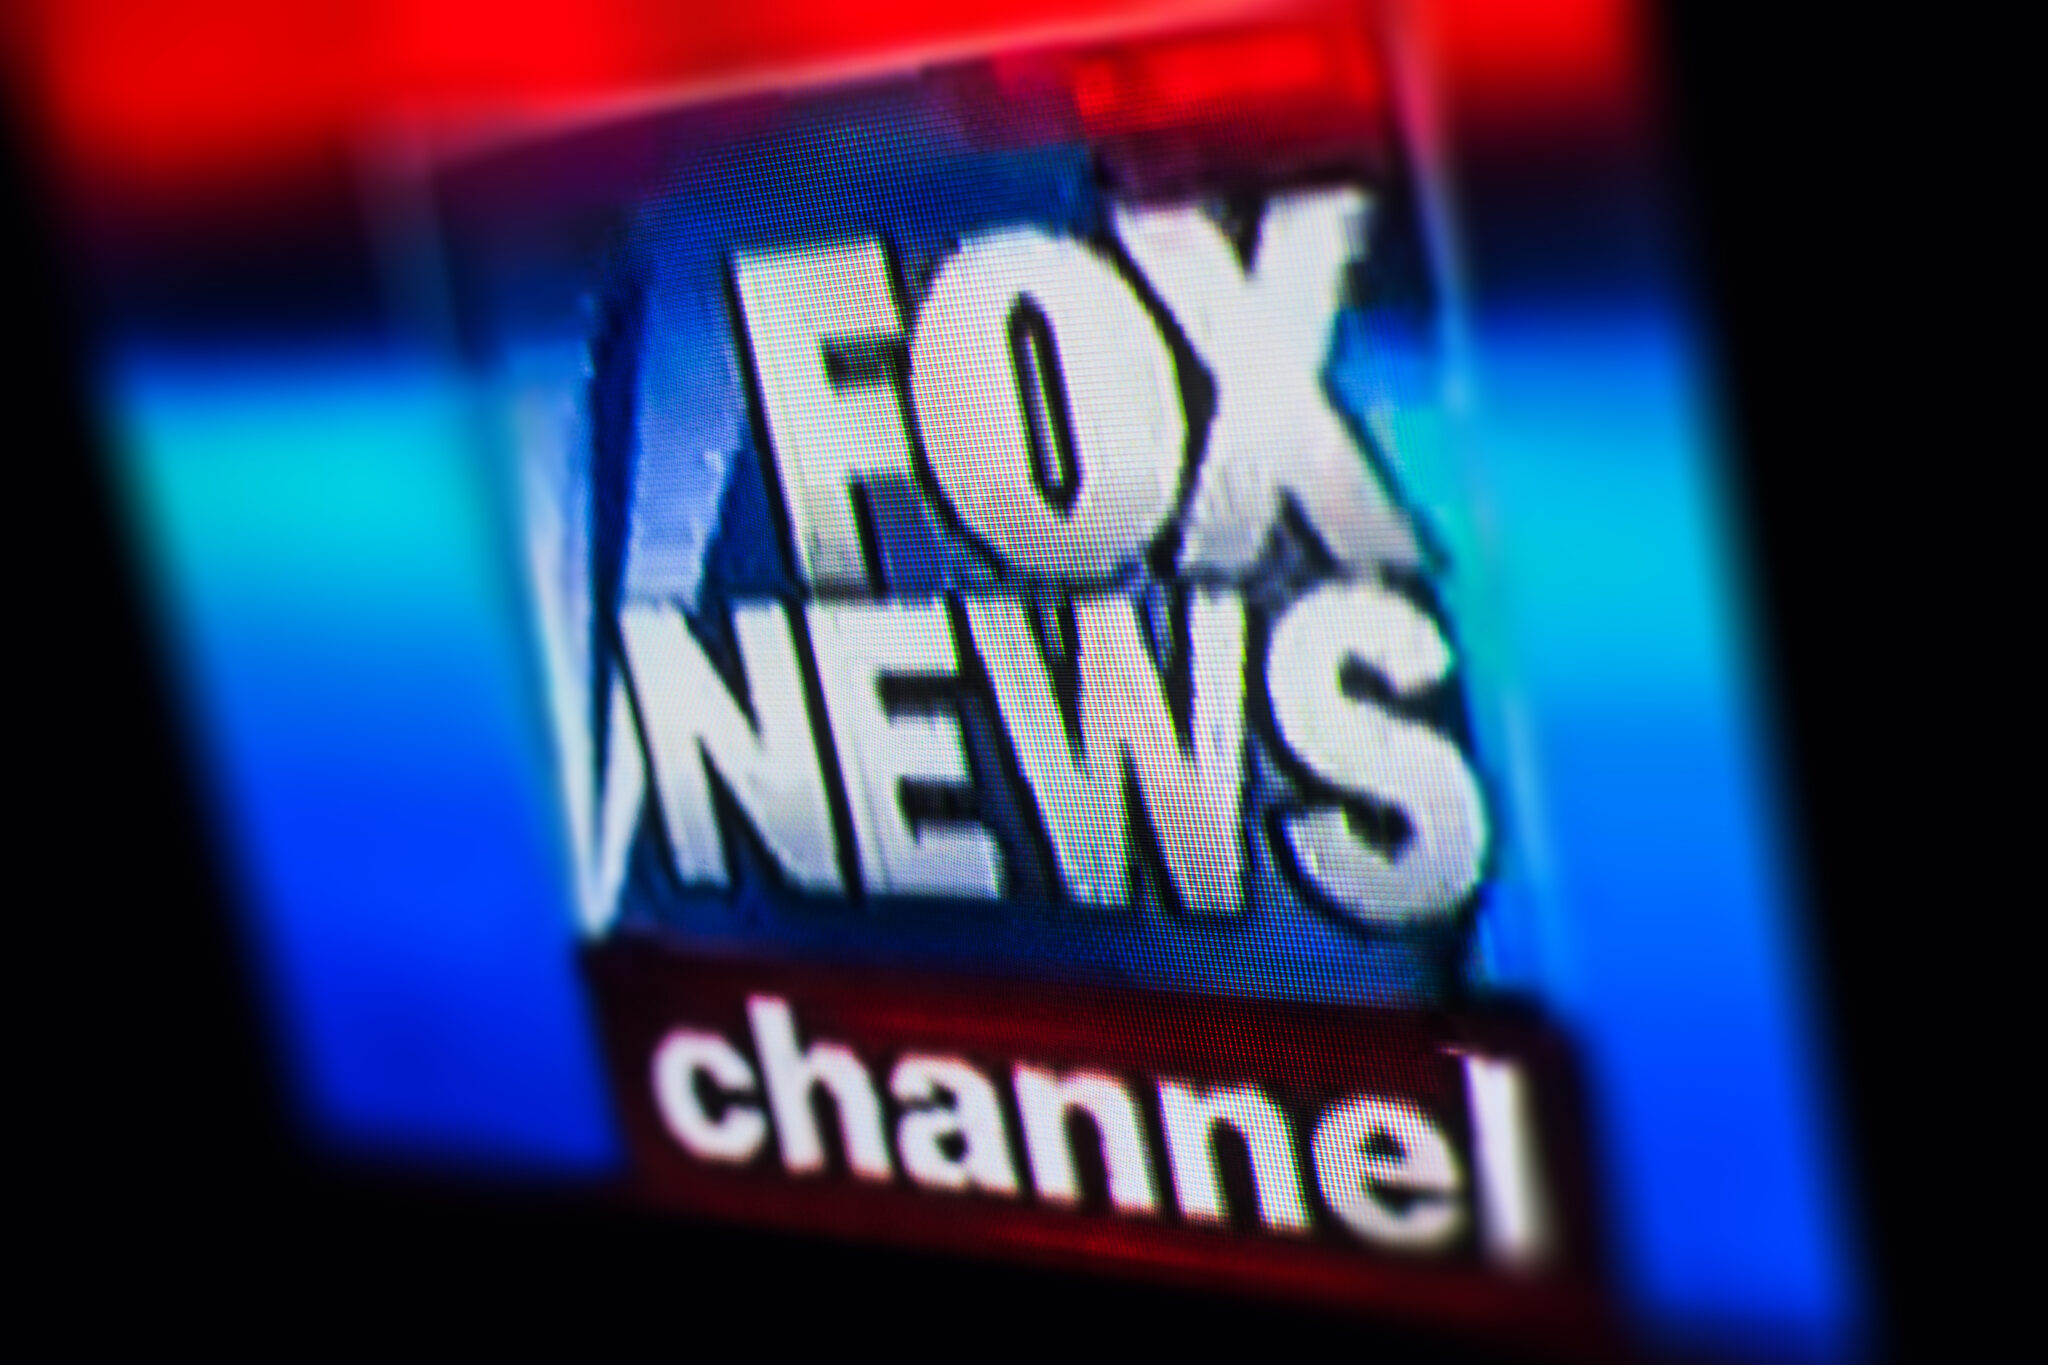 Photo of FOX NEWS chanel logo on a tv monitor screen